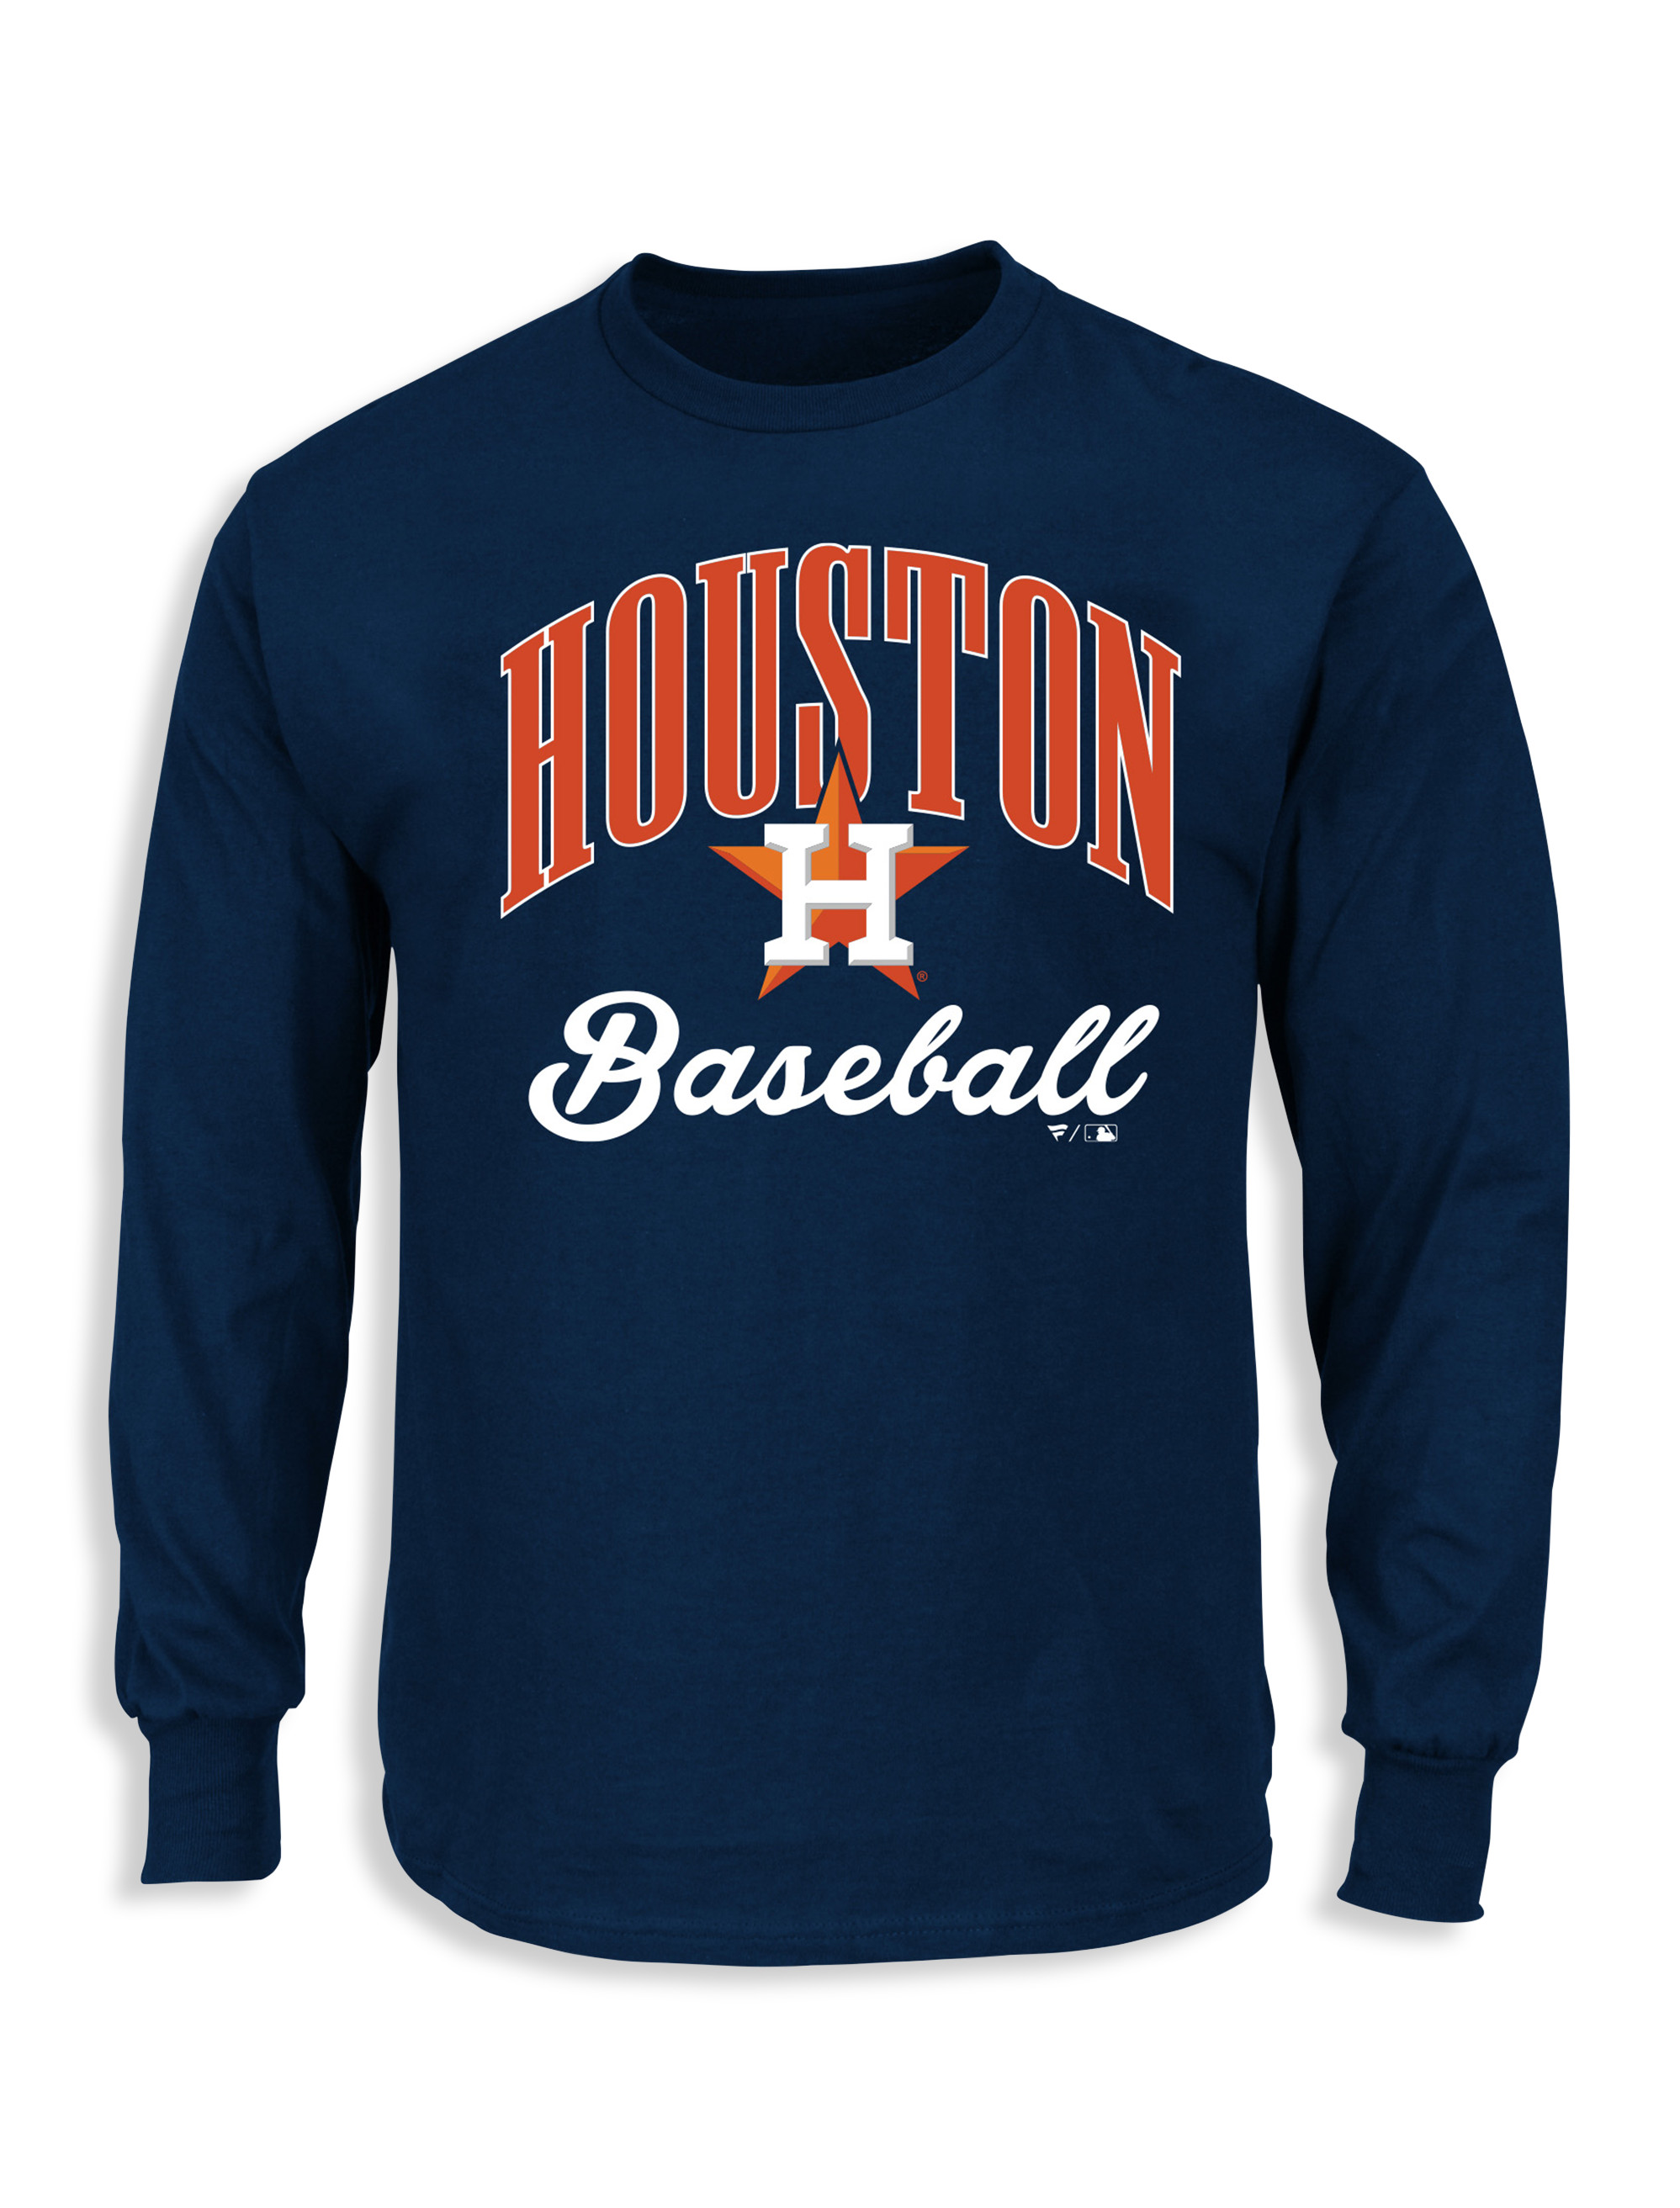 New Houston Astros Mens Sizes 2XL-3XL-4XL-5XL-Tall Majestic Black Camo Shirt  $35